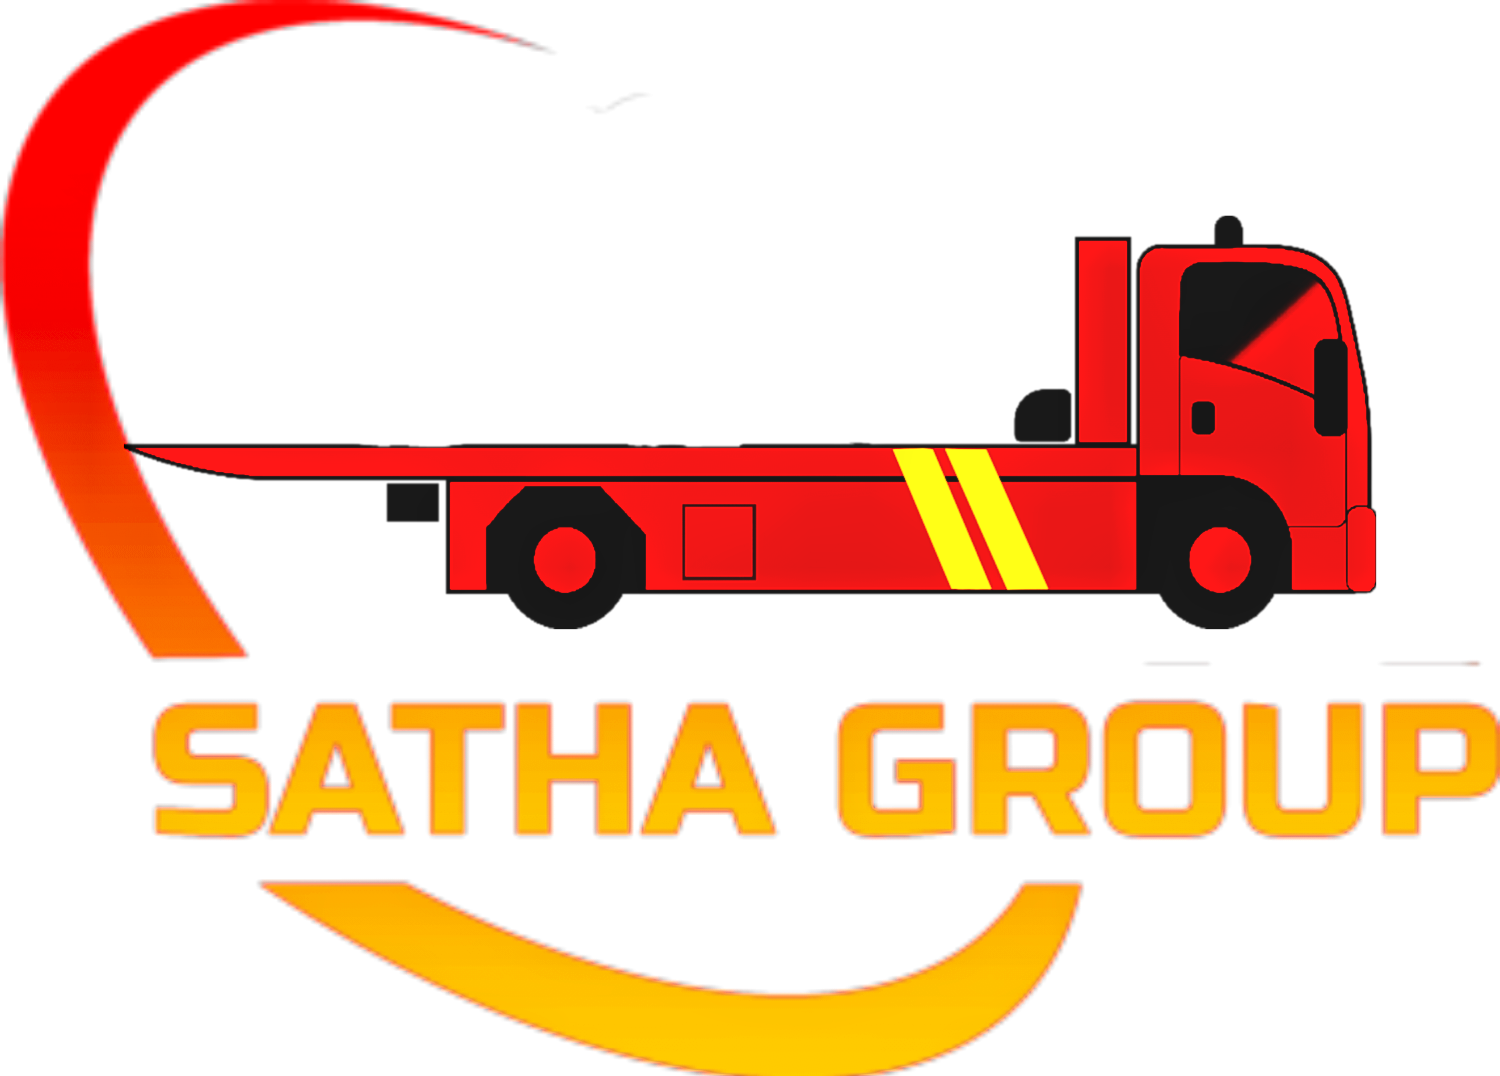 سطحة الرياض satha group